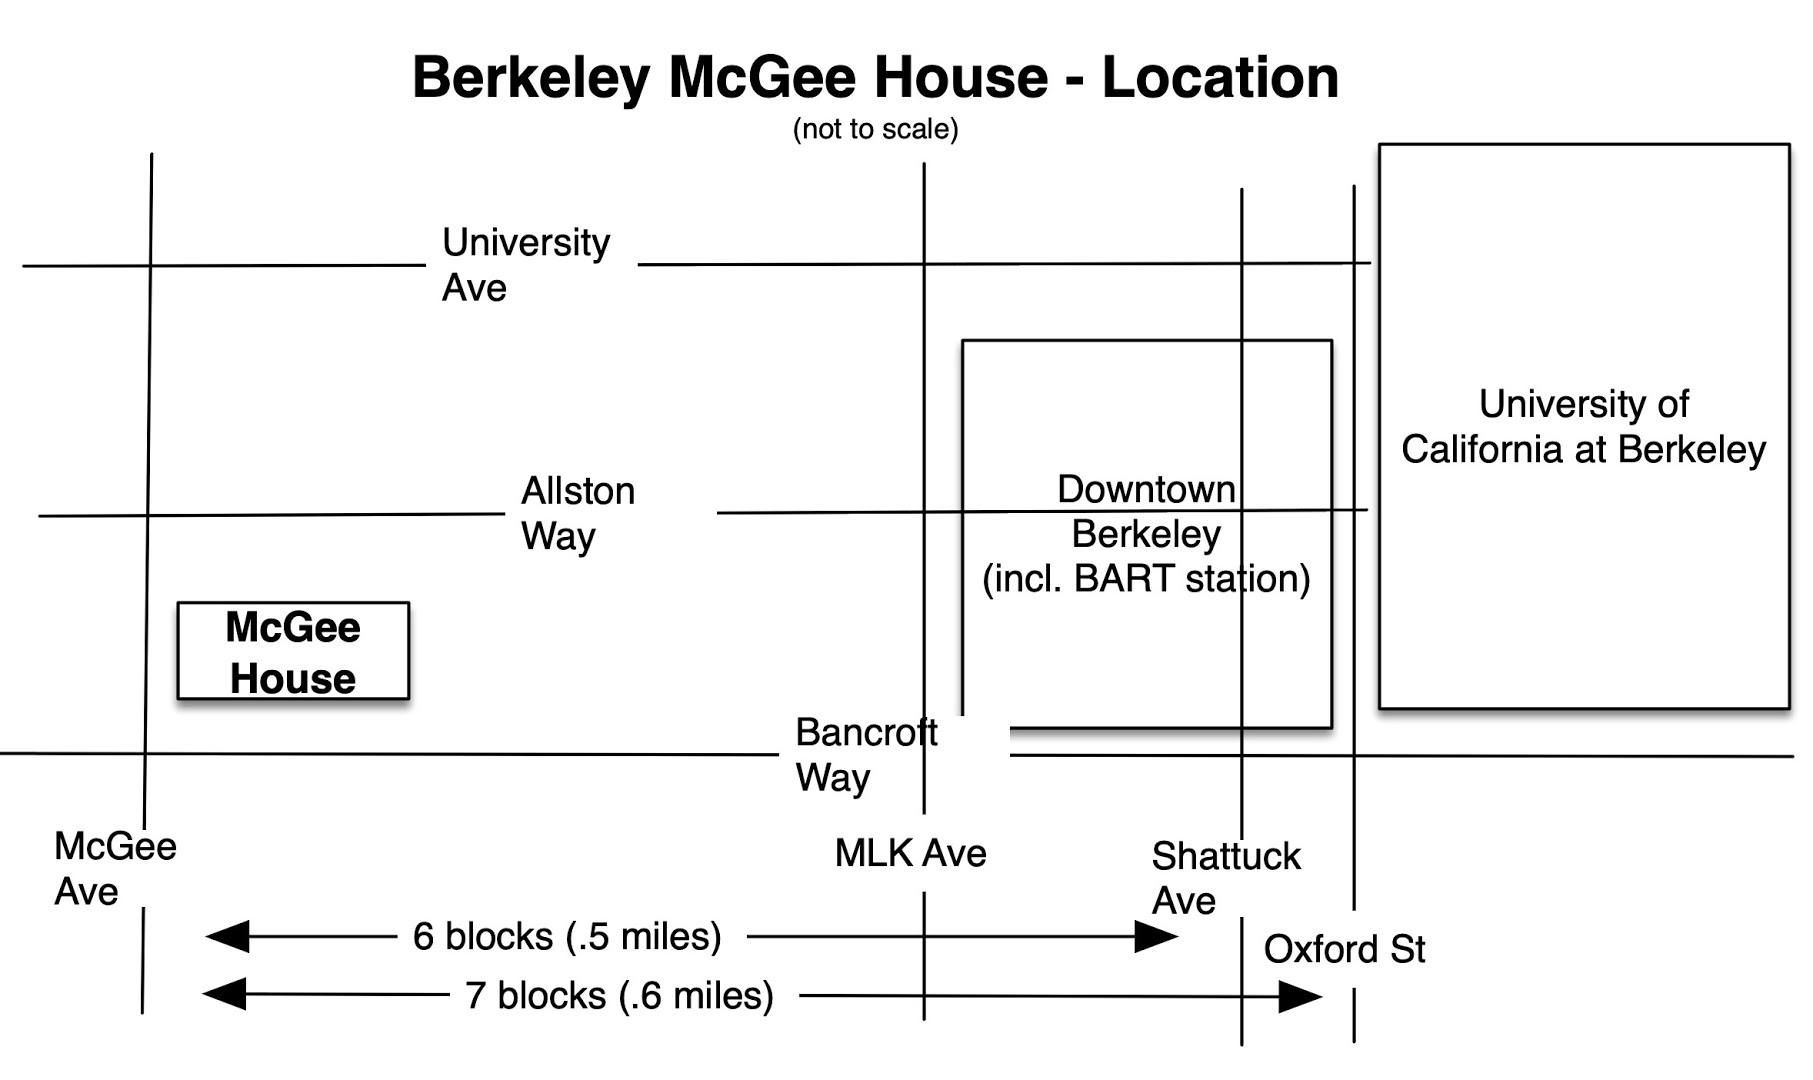 McGee House Location in Berkeley